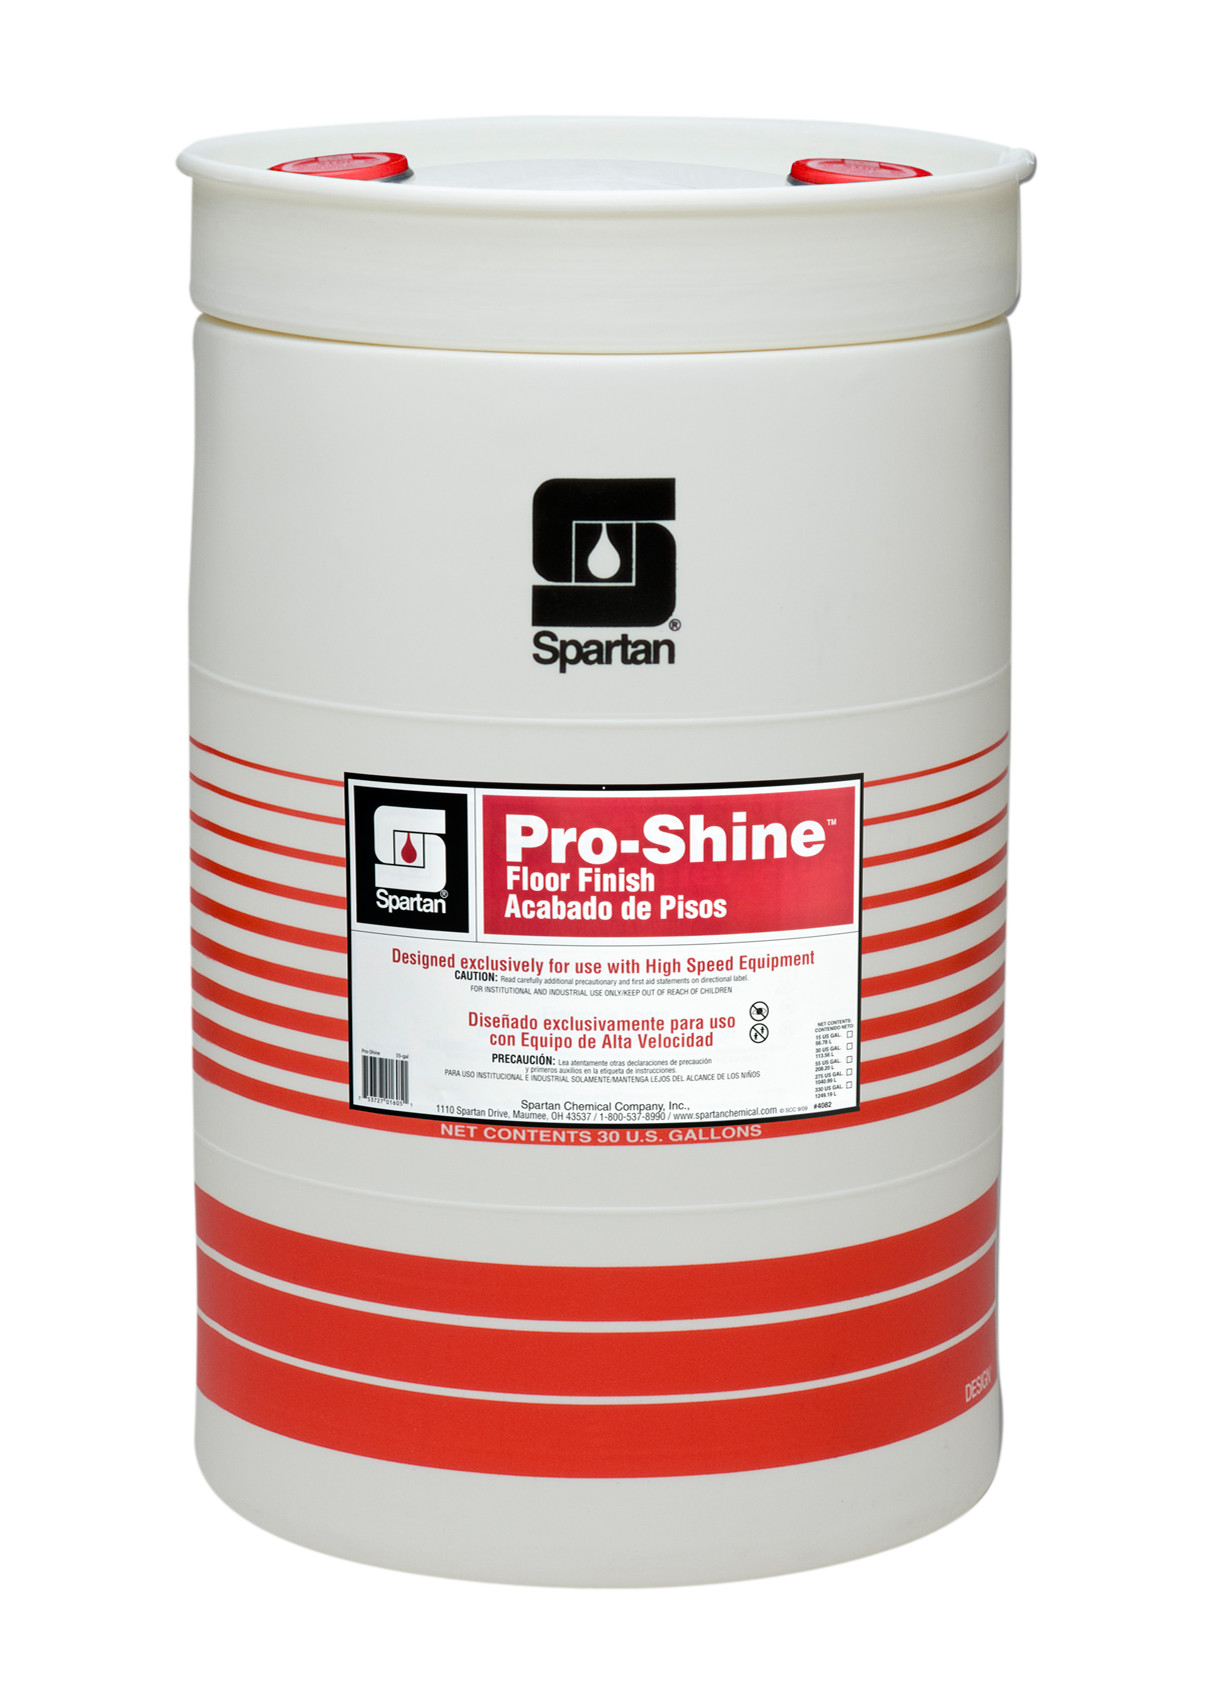 Spartan Chemical Company Pro-Shine, 30 GAL DRUM